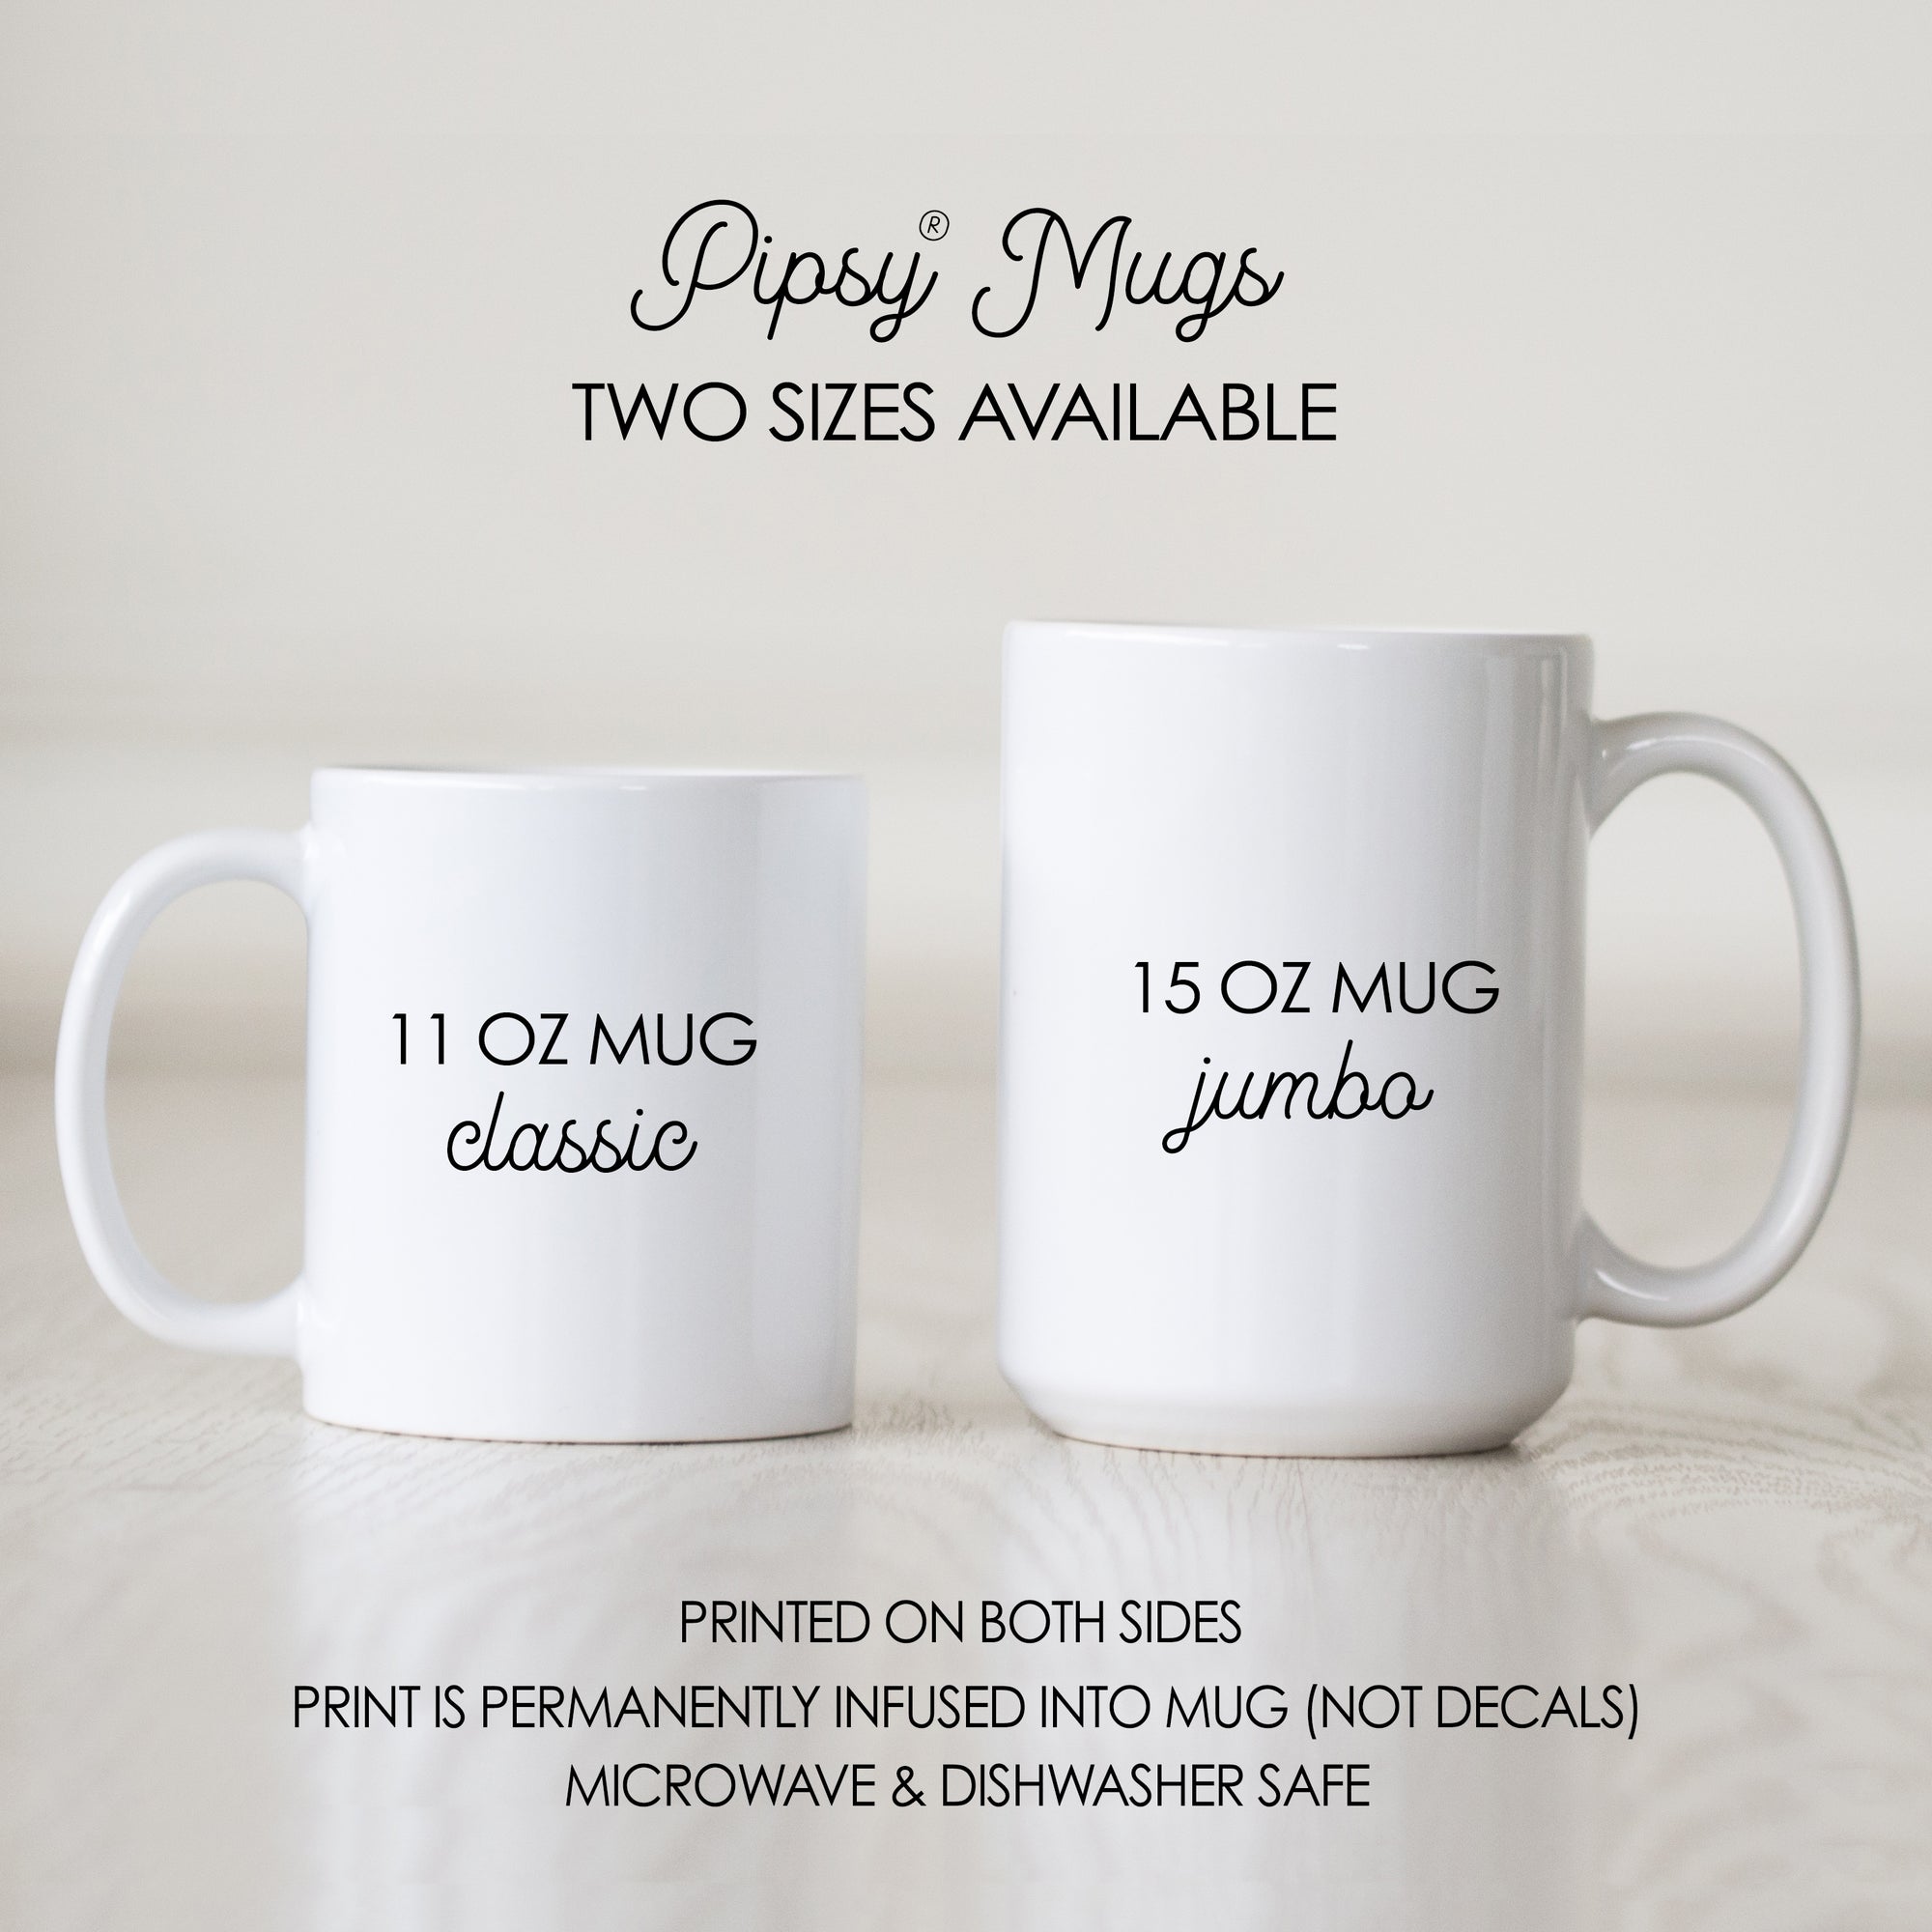 Pipsy mug sizes: 11 and 15 ounce